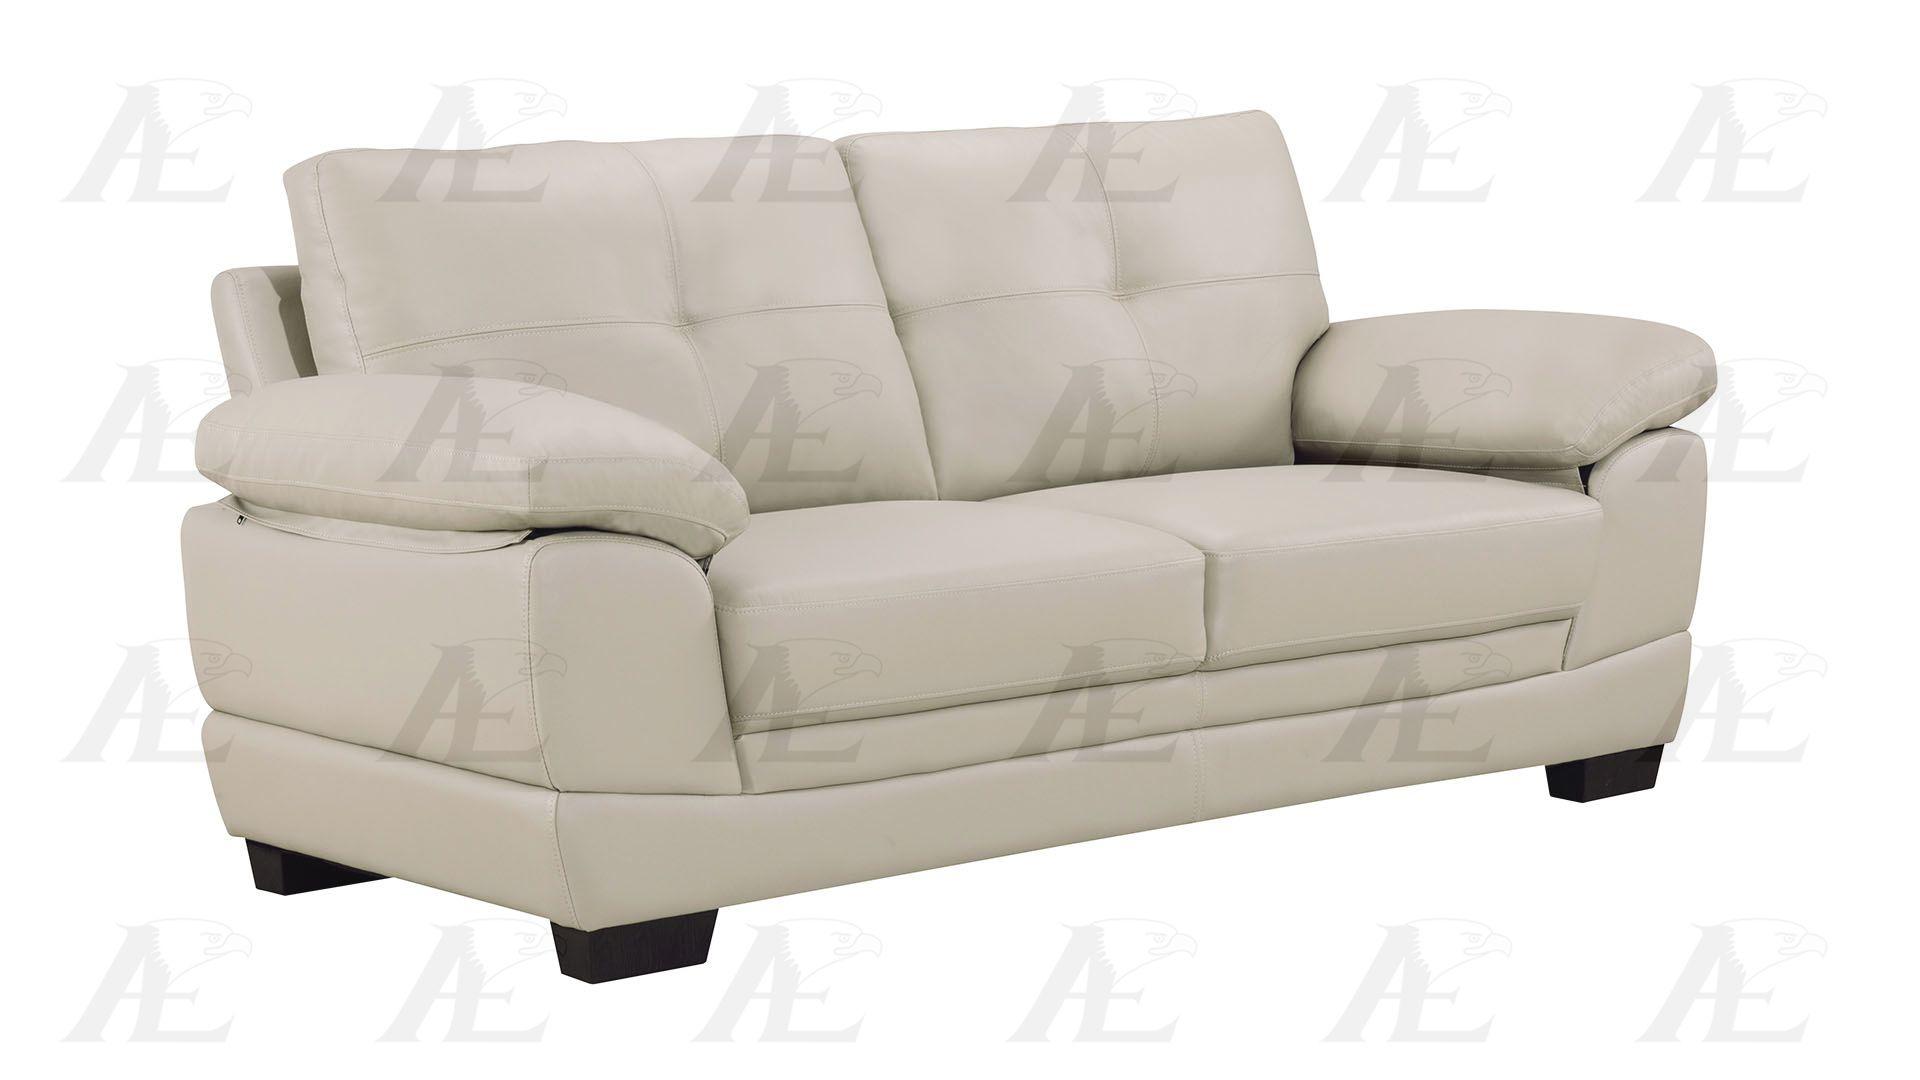 

    
American Eagle EK510 Light Gray Genuine Leather 2pcs Living Room Sofa Set in Contemporary Style
